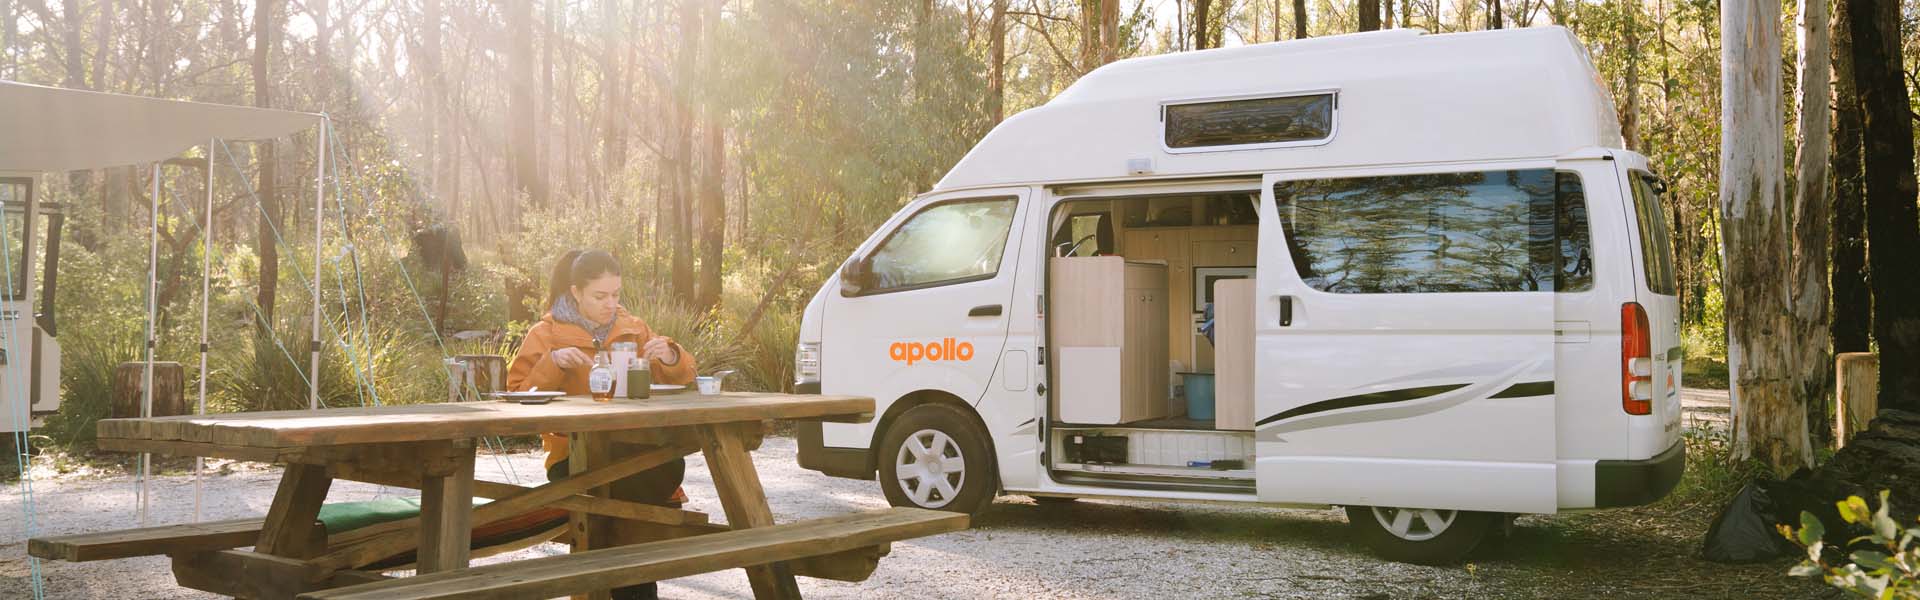 Apollo rental campervan in regional Australia